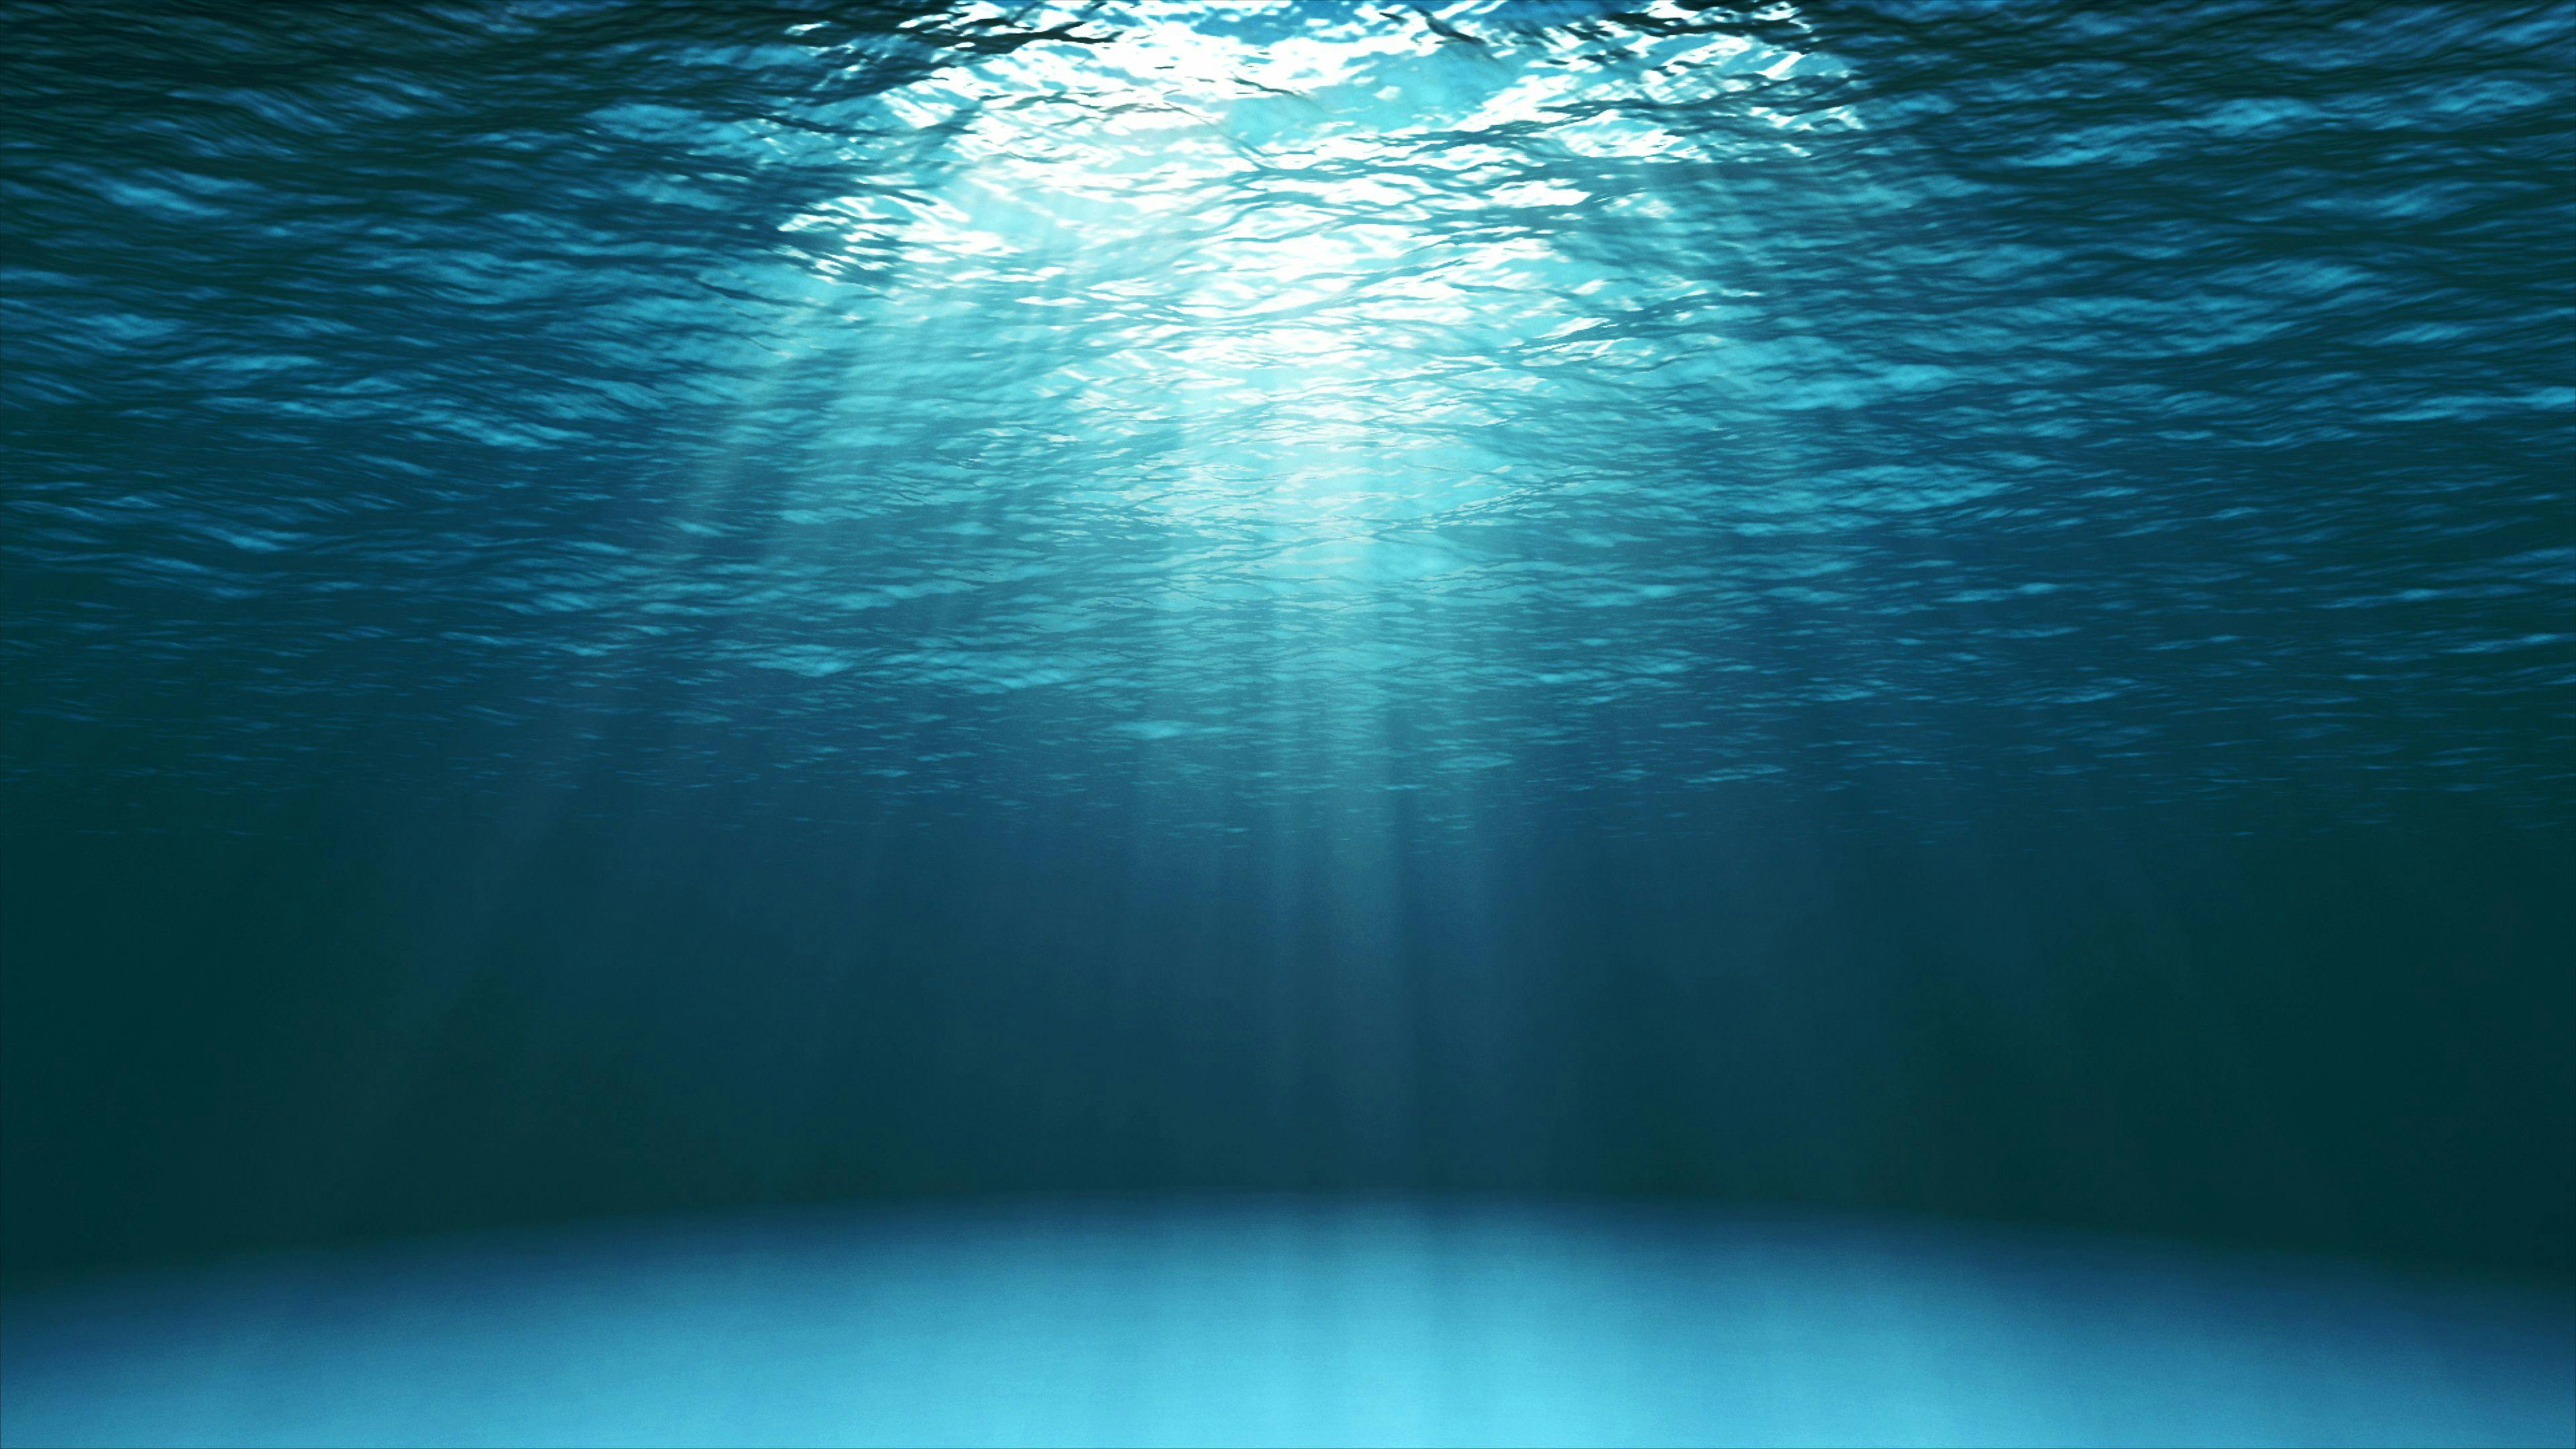 Dark blue ocean surface seen from underwater | Image Credit: © katatonia - stock.adobe.com